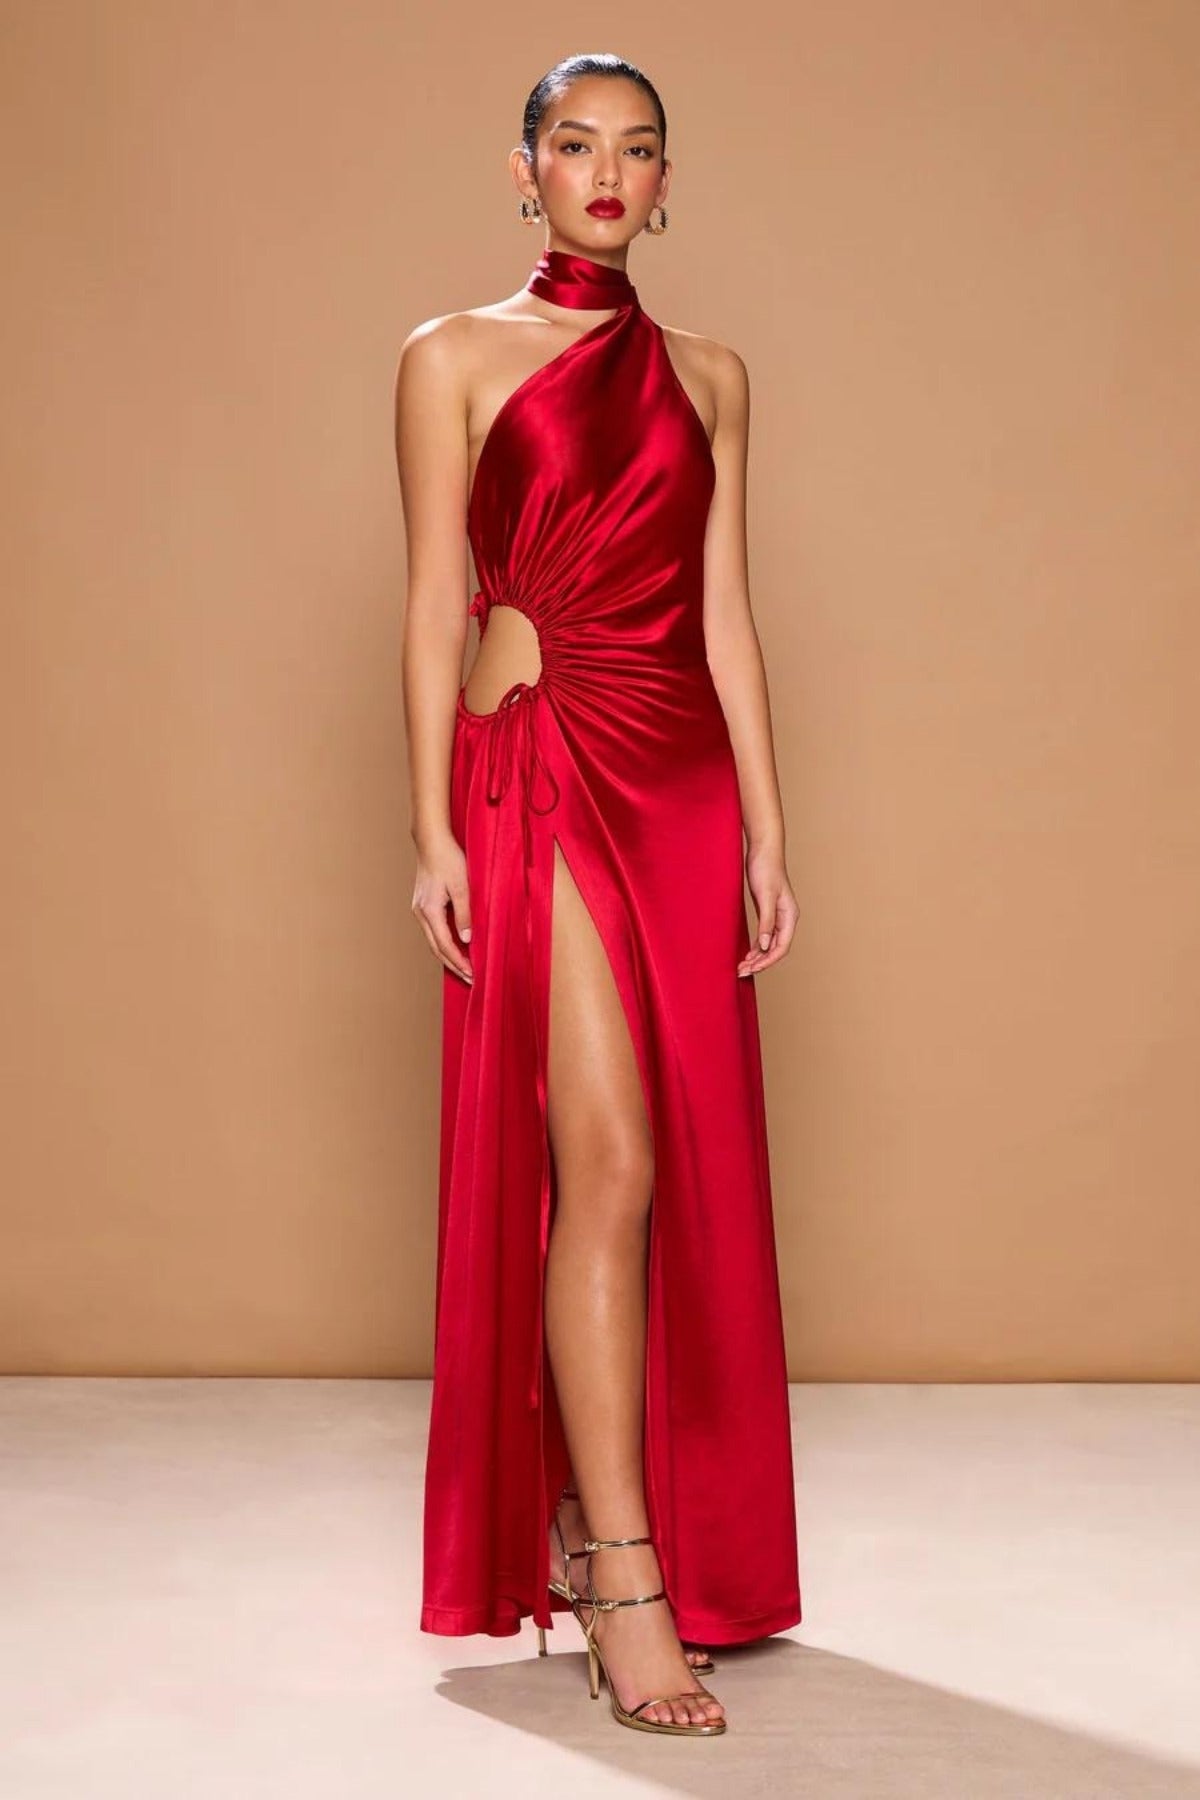 SONYA MODA Alia Maxi Dress (Sorrento Red)